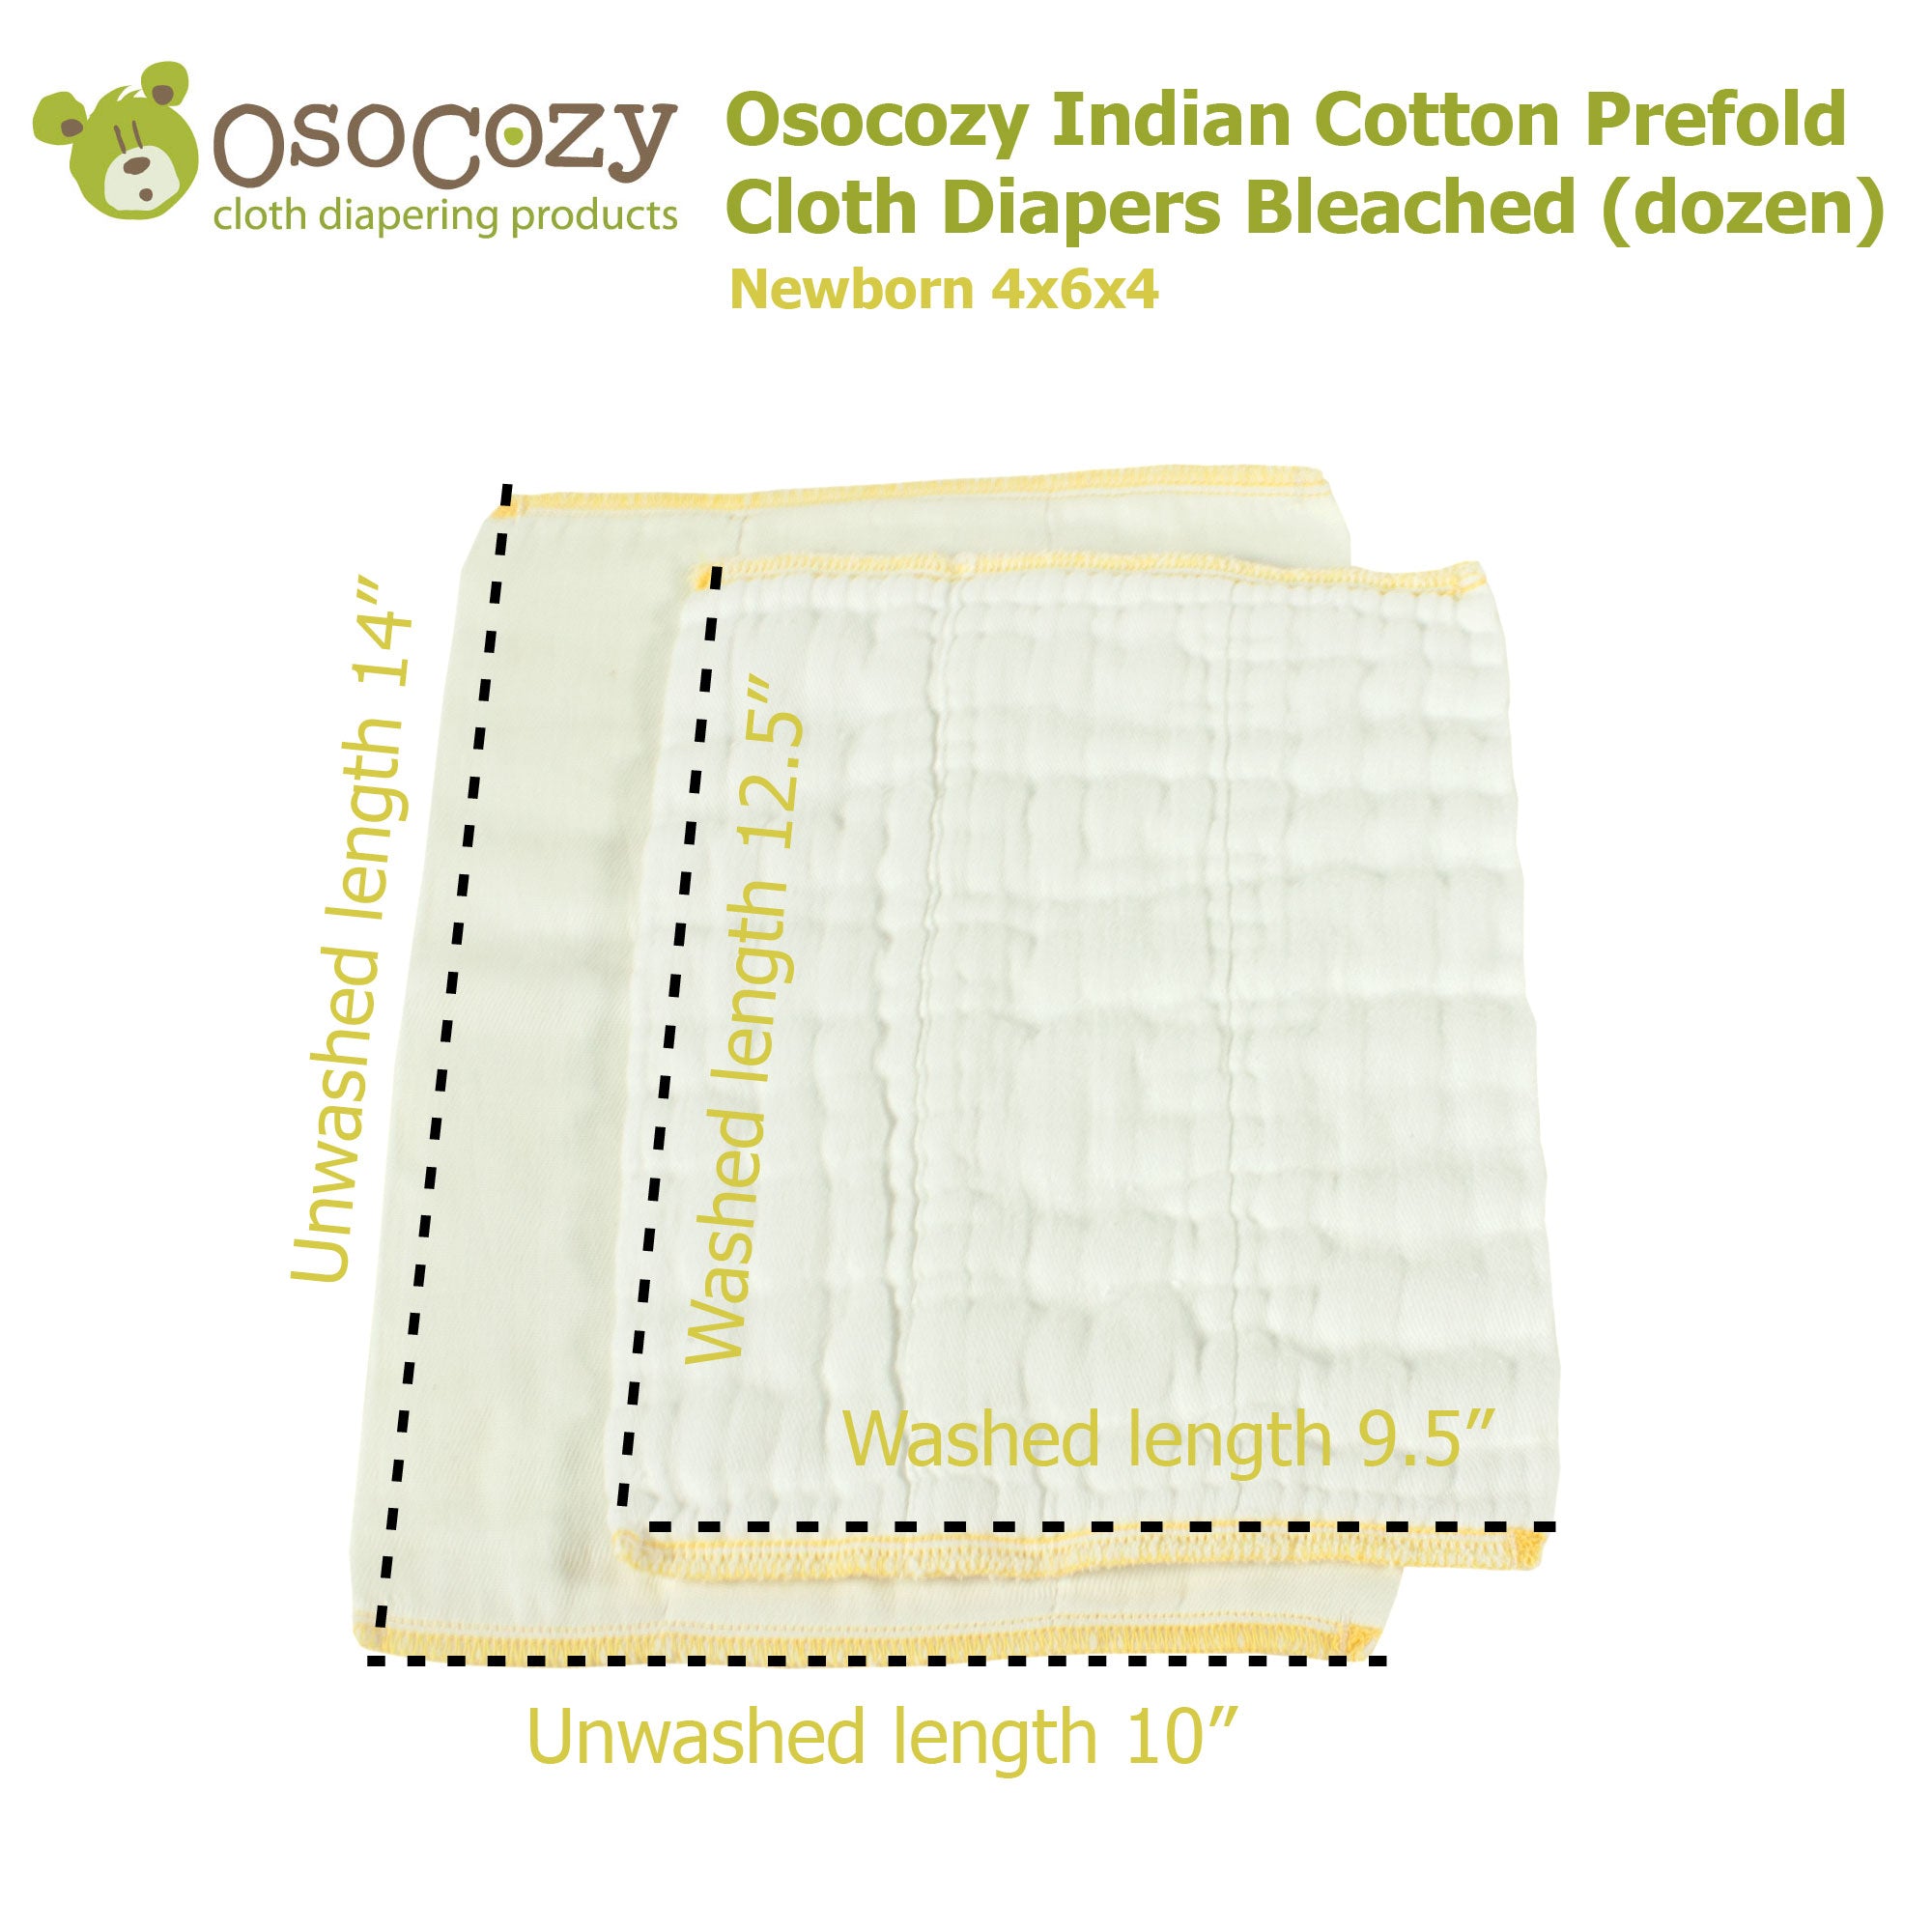 Osocozy Indian Cotton Prefold Cloth Diapers Bleached (dozen)